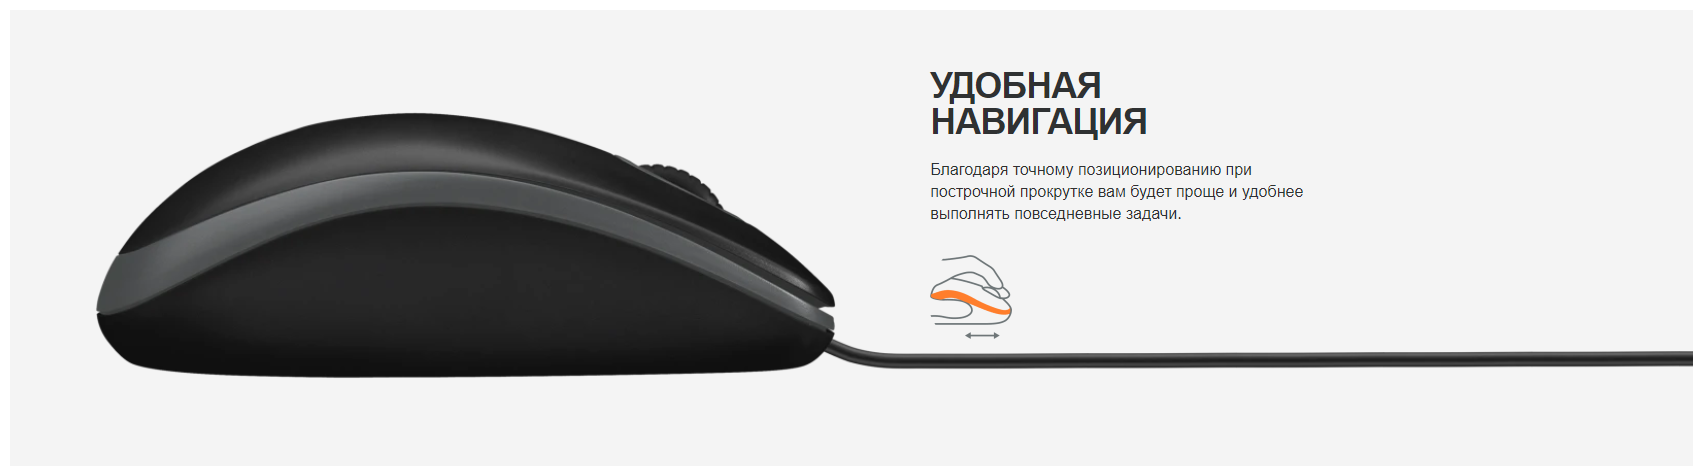 Мышь Logitech B100 for business, черный (910-003357/910-006605)